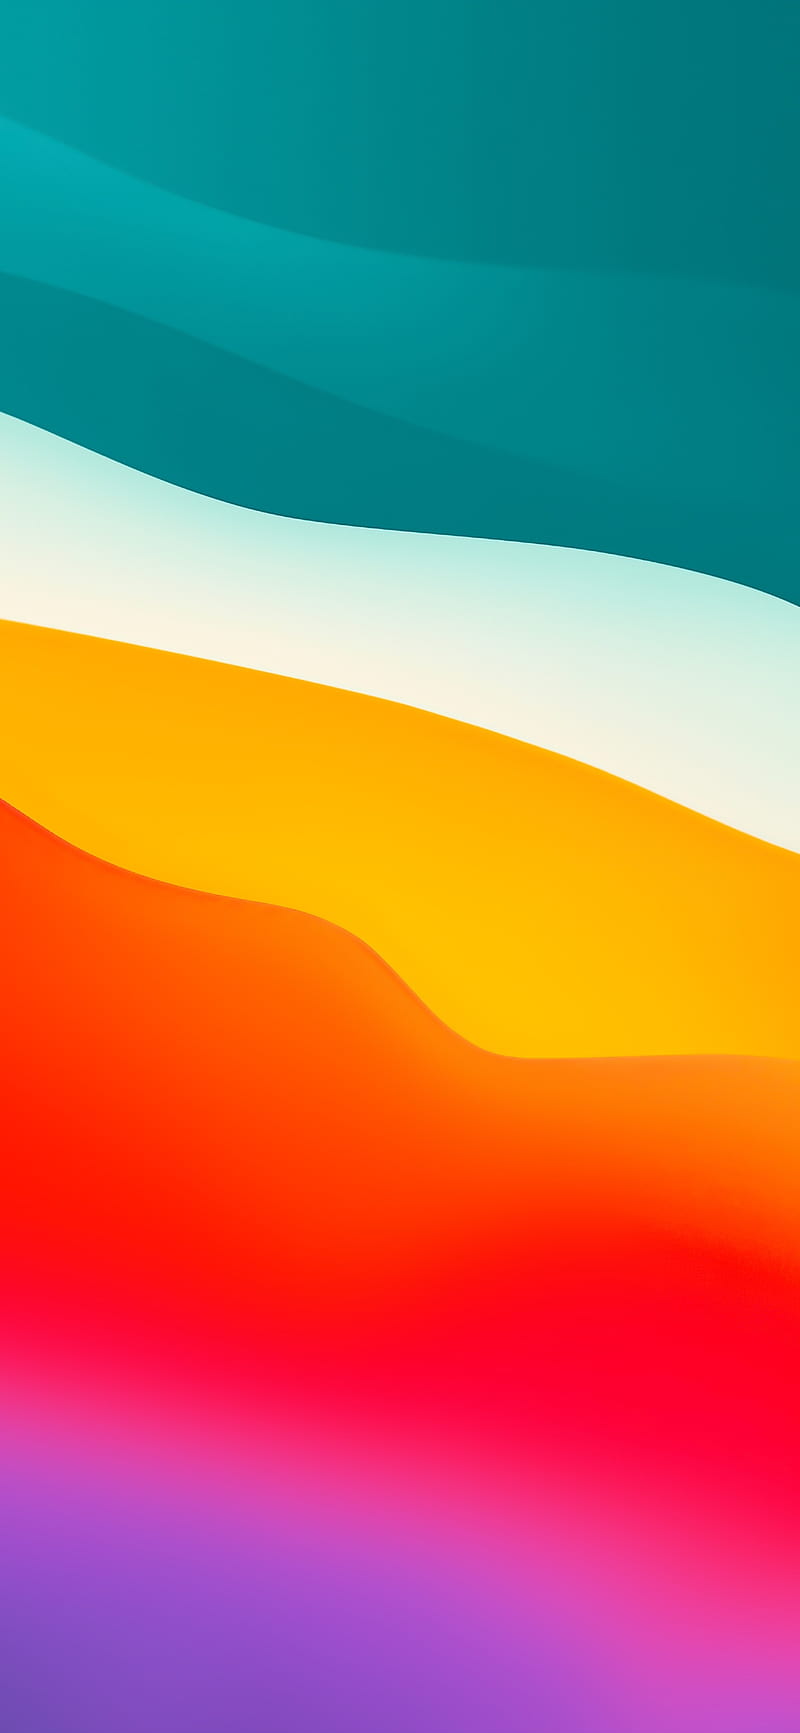 Wallpaper orange-pink-blue shape, ipad os 14 desktop wallpaper, hd image,  picture, background, e65f6c | wallpapersmug